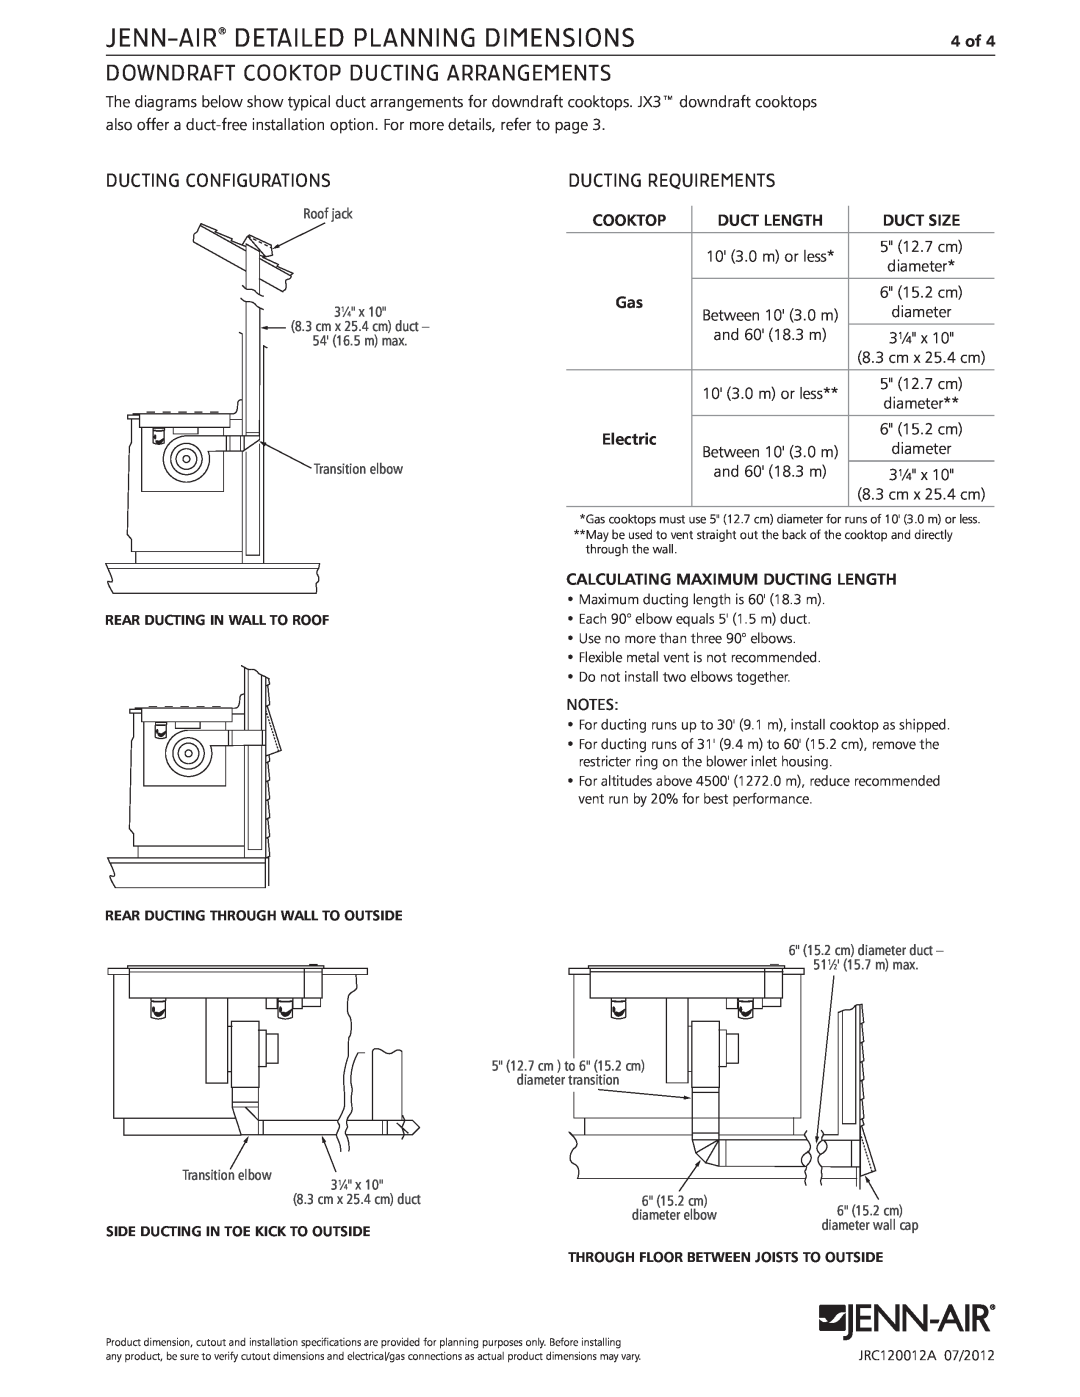 Jenn-Air JRC120012A Downdraft Cooktop Ducting Arrangements, Ducting Configurations, Ducting Requirements, Transition elbow 